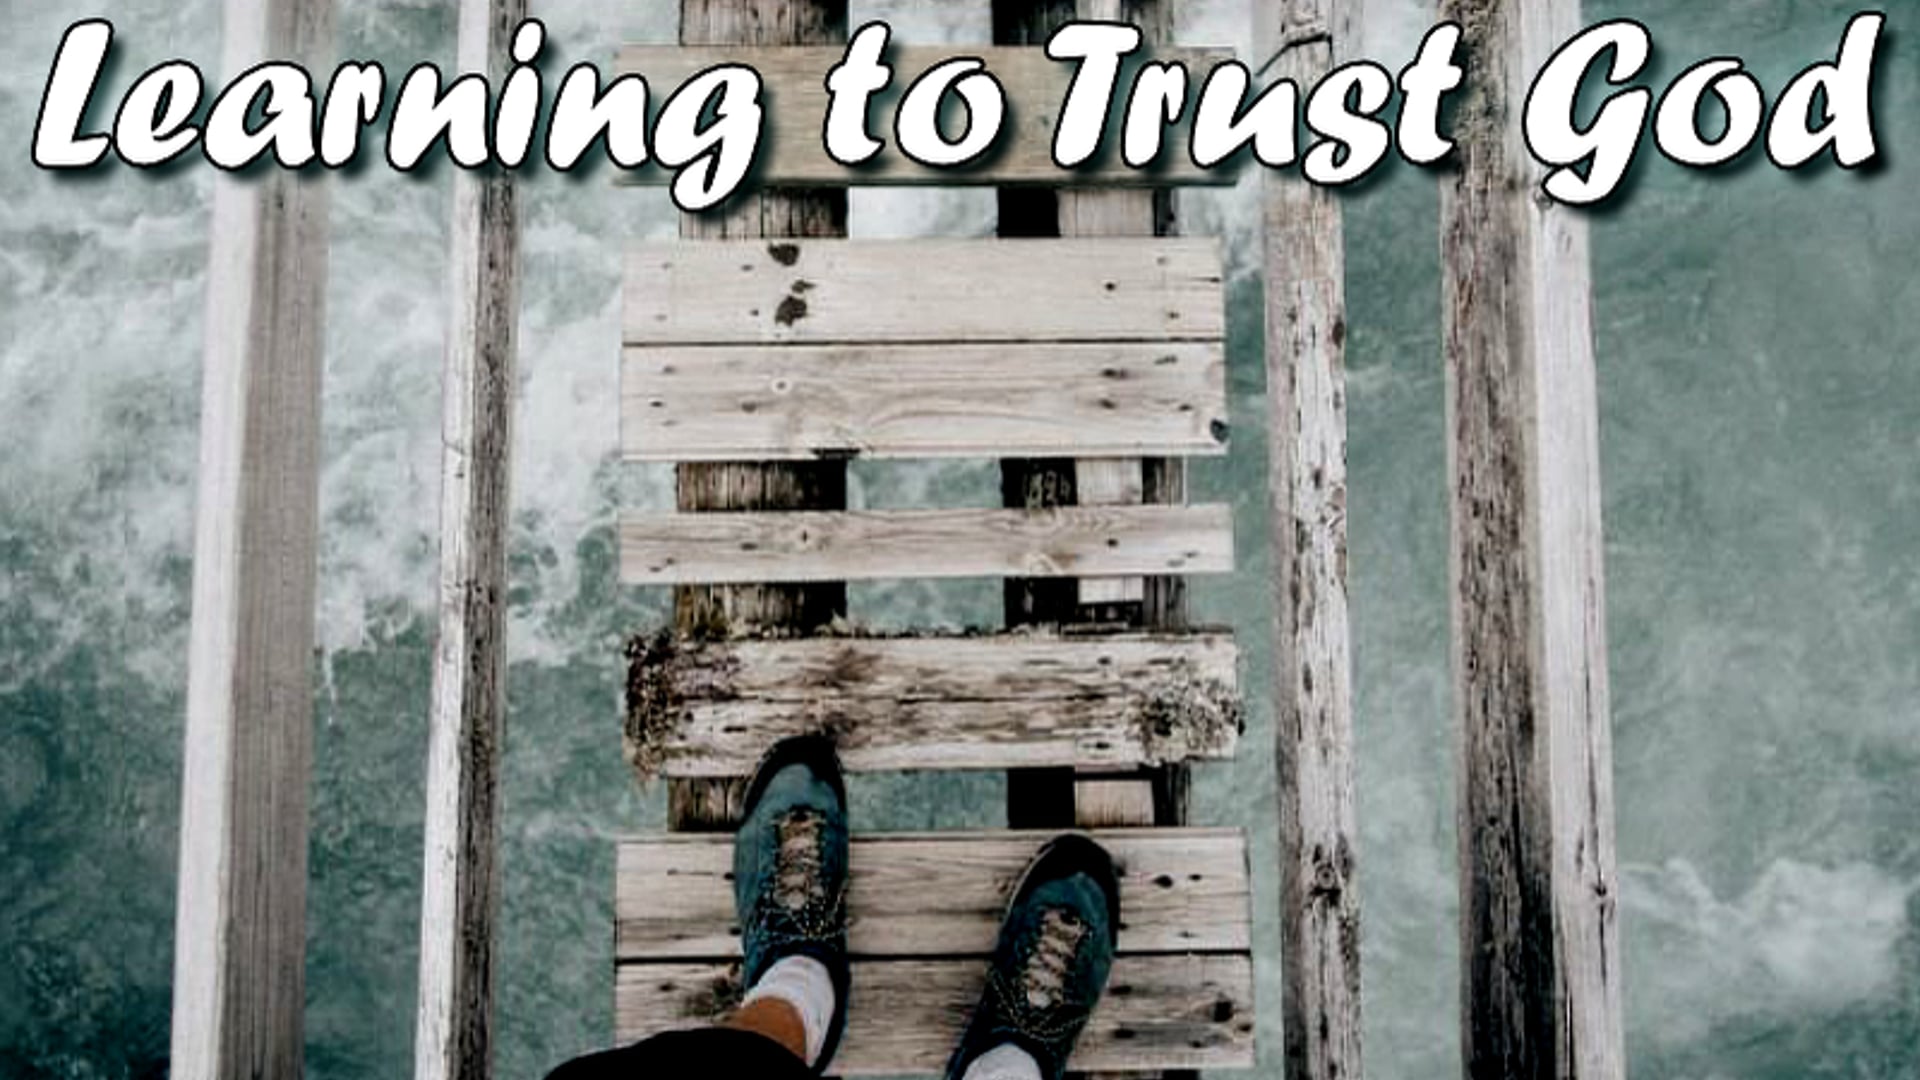 Nov 28, 2021 Learning To Trust God